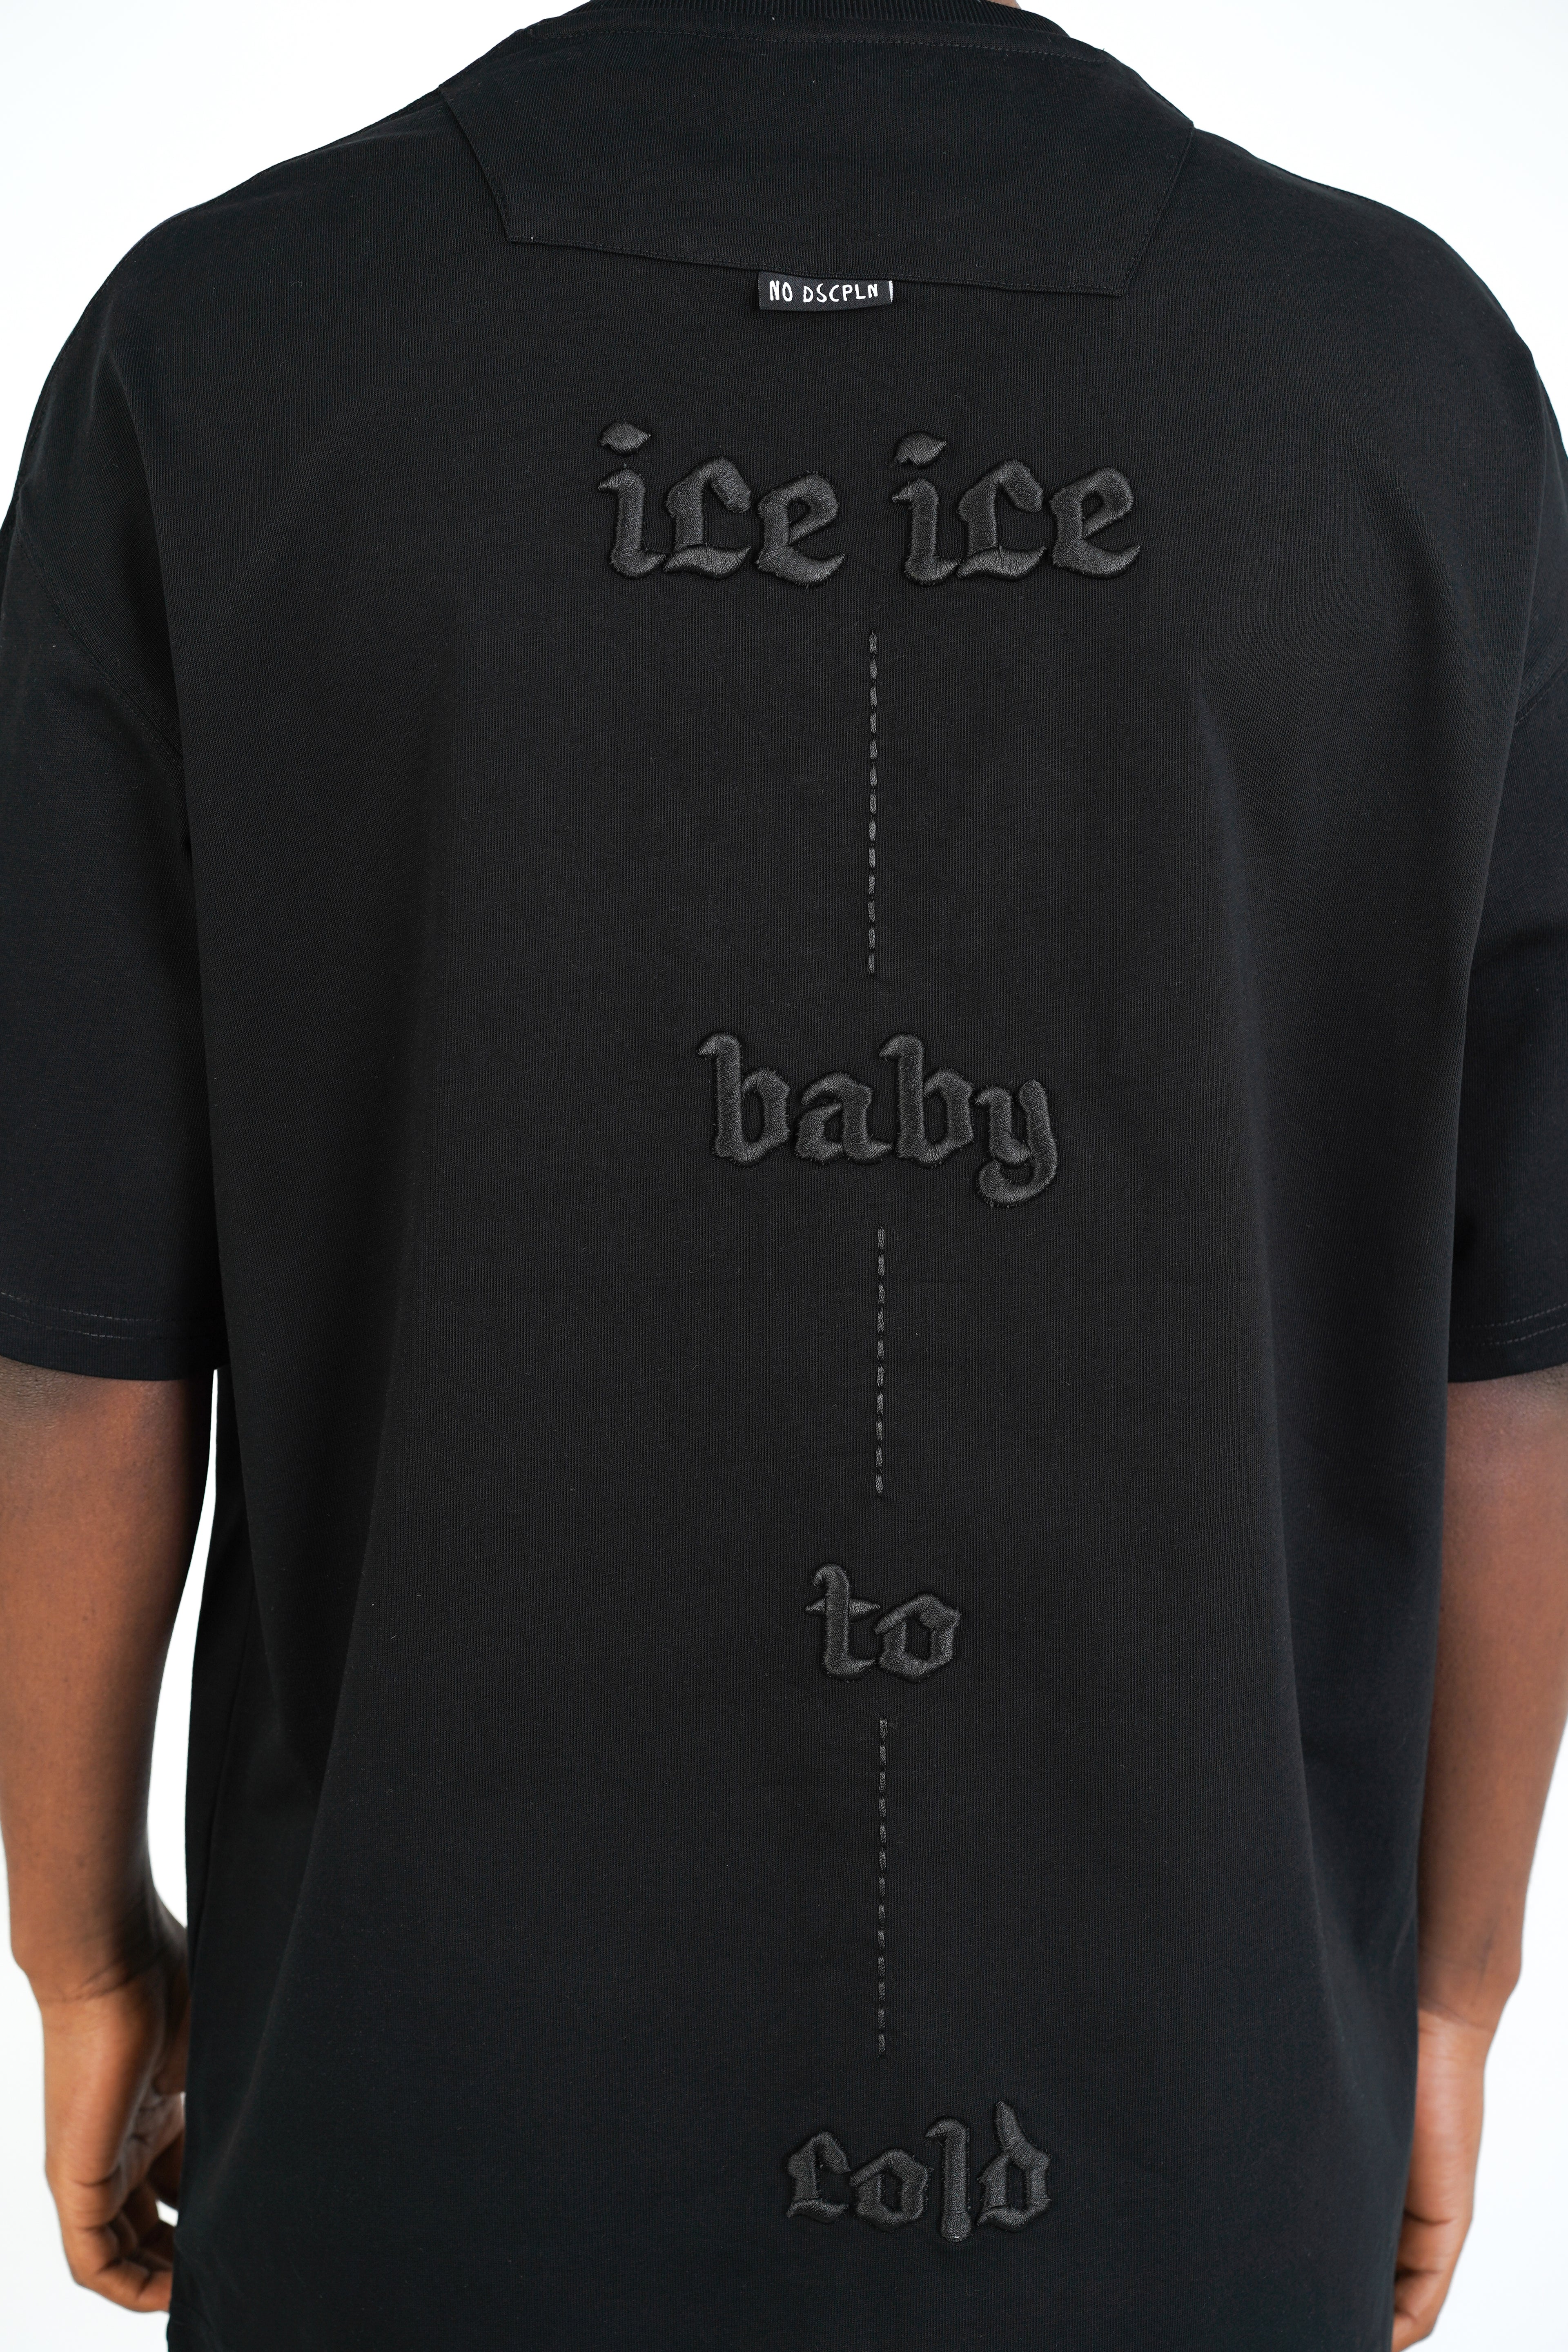 T-SHIRT - ICE ICE BABY - BLACK